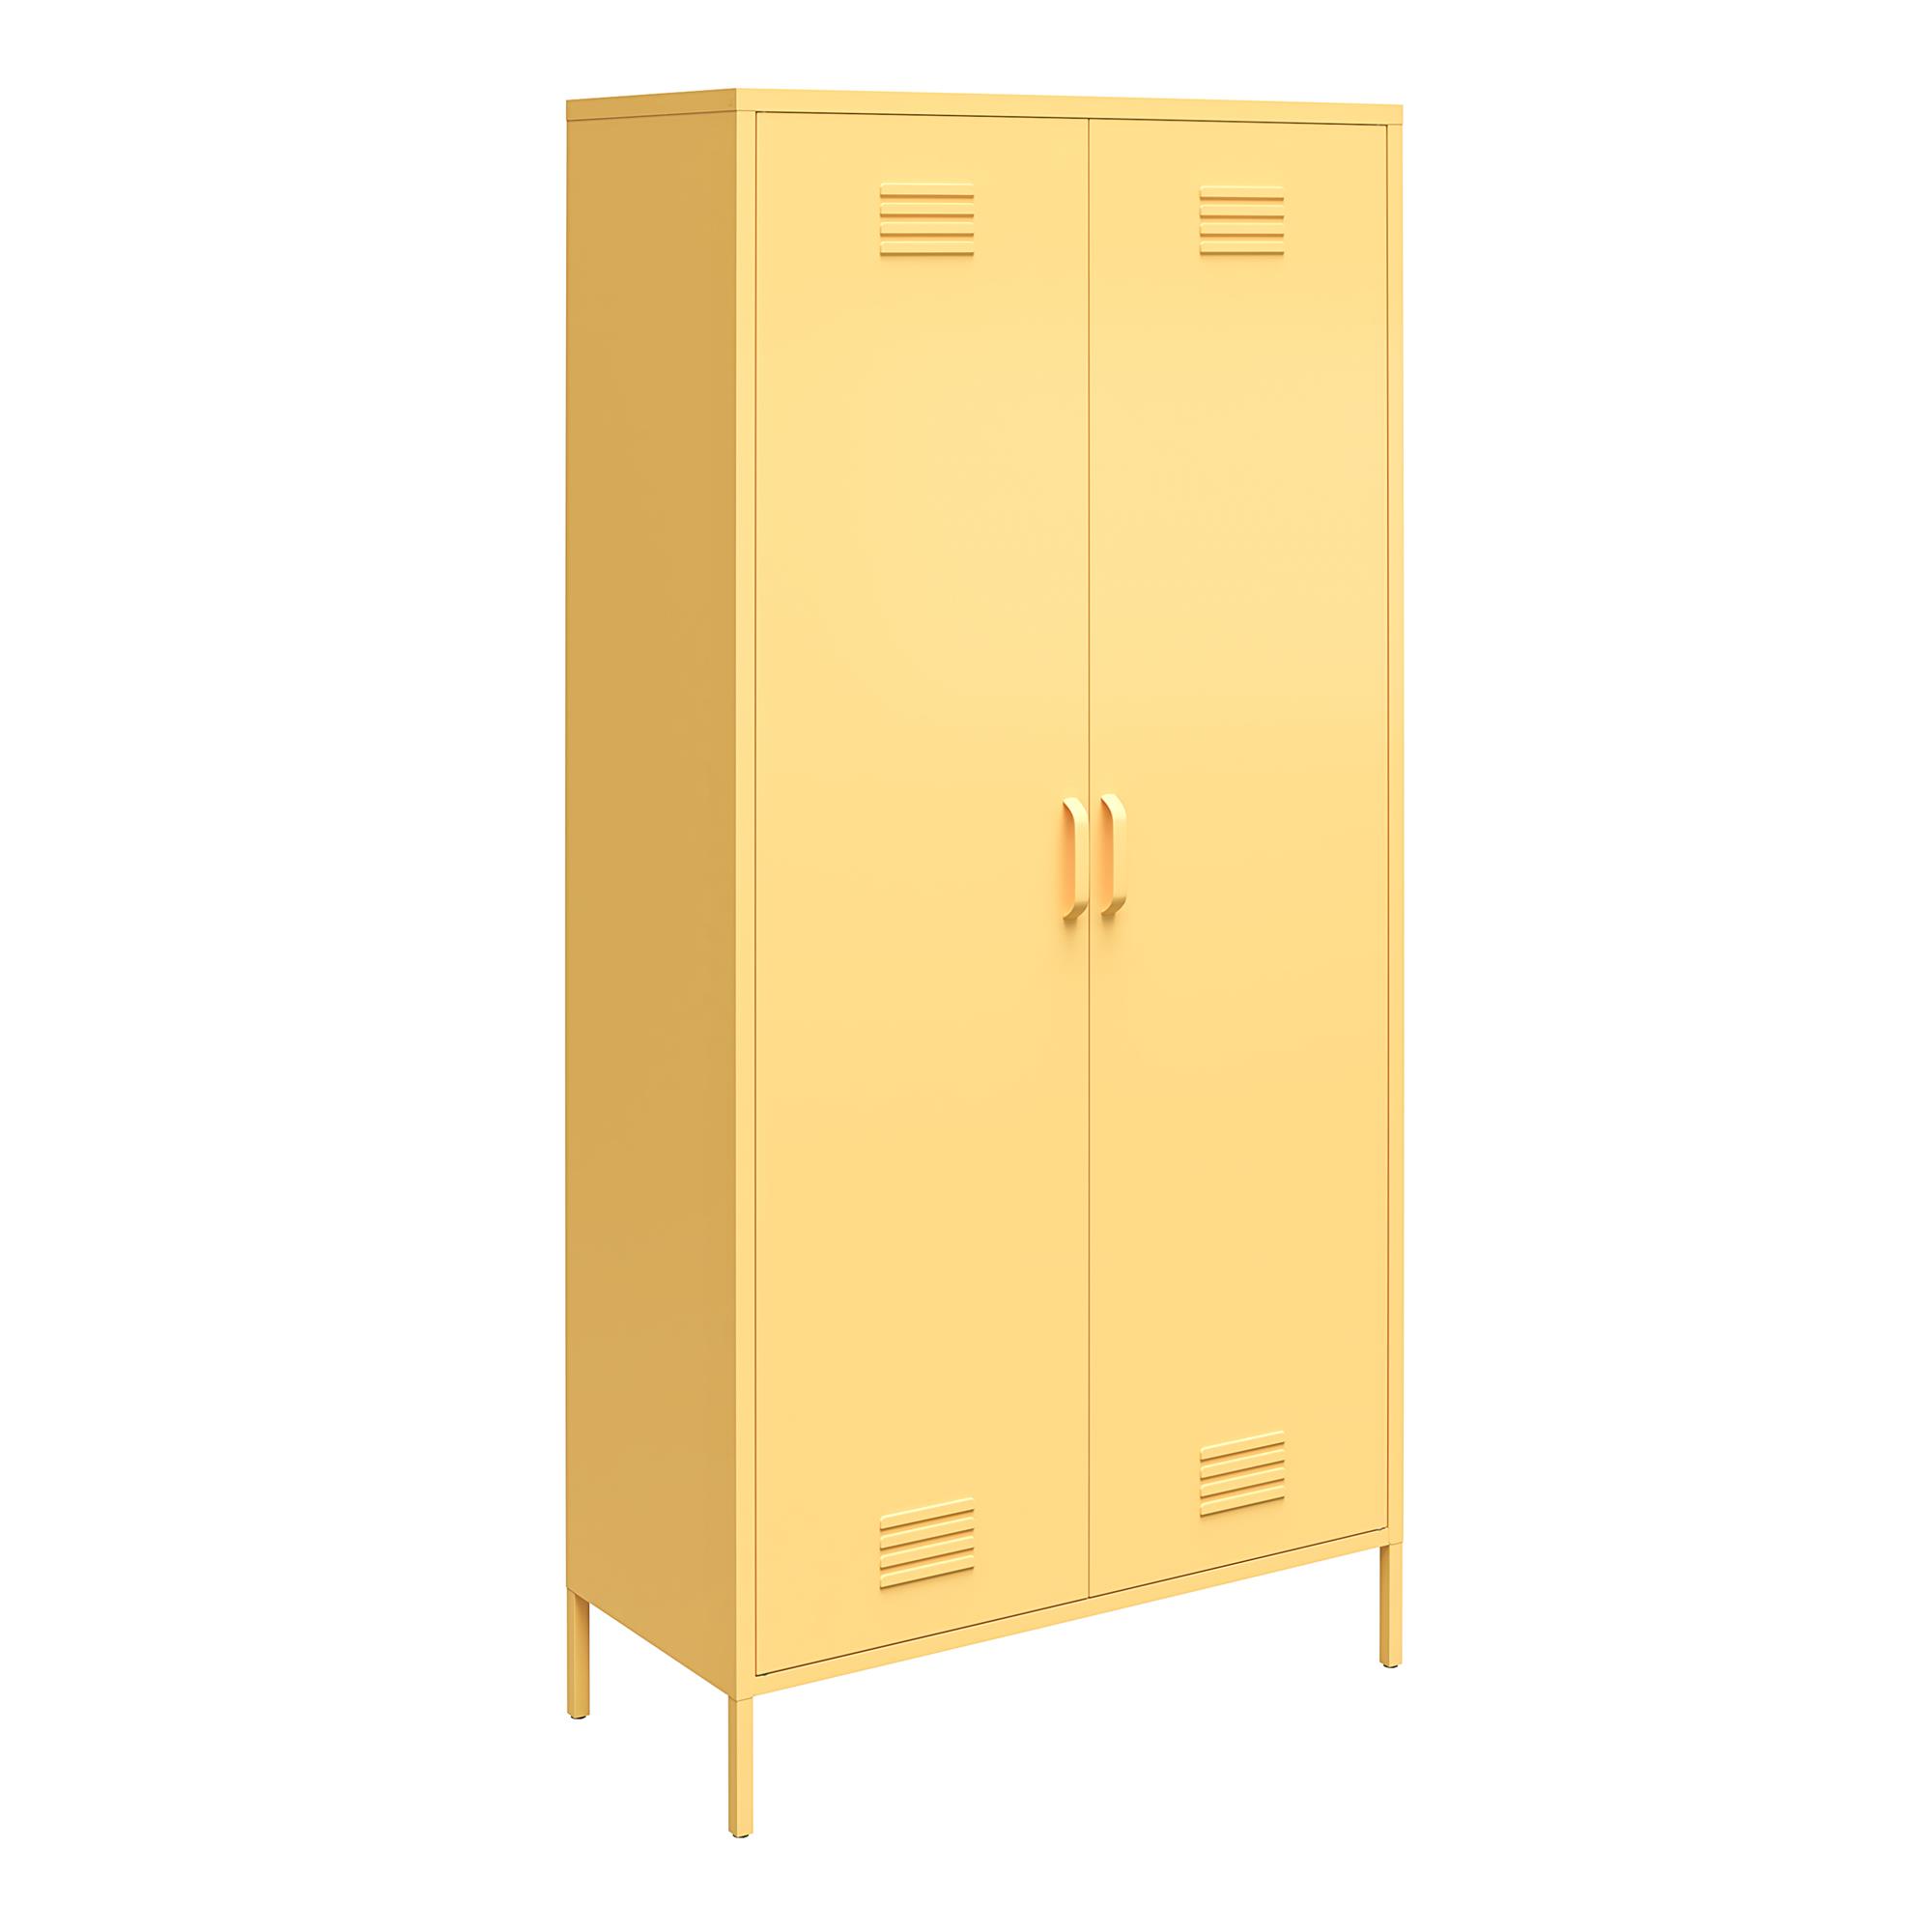 The Novogratz Cache 2 Door Metal Locker Storage Cabinet - On Sale